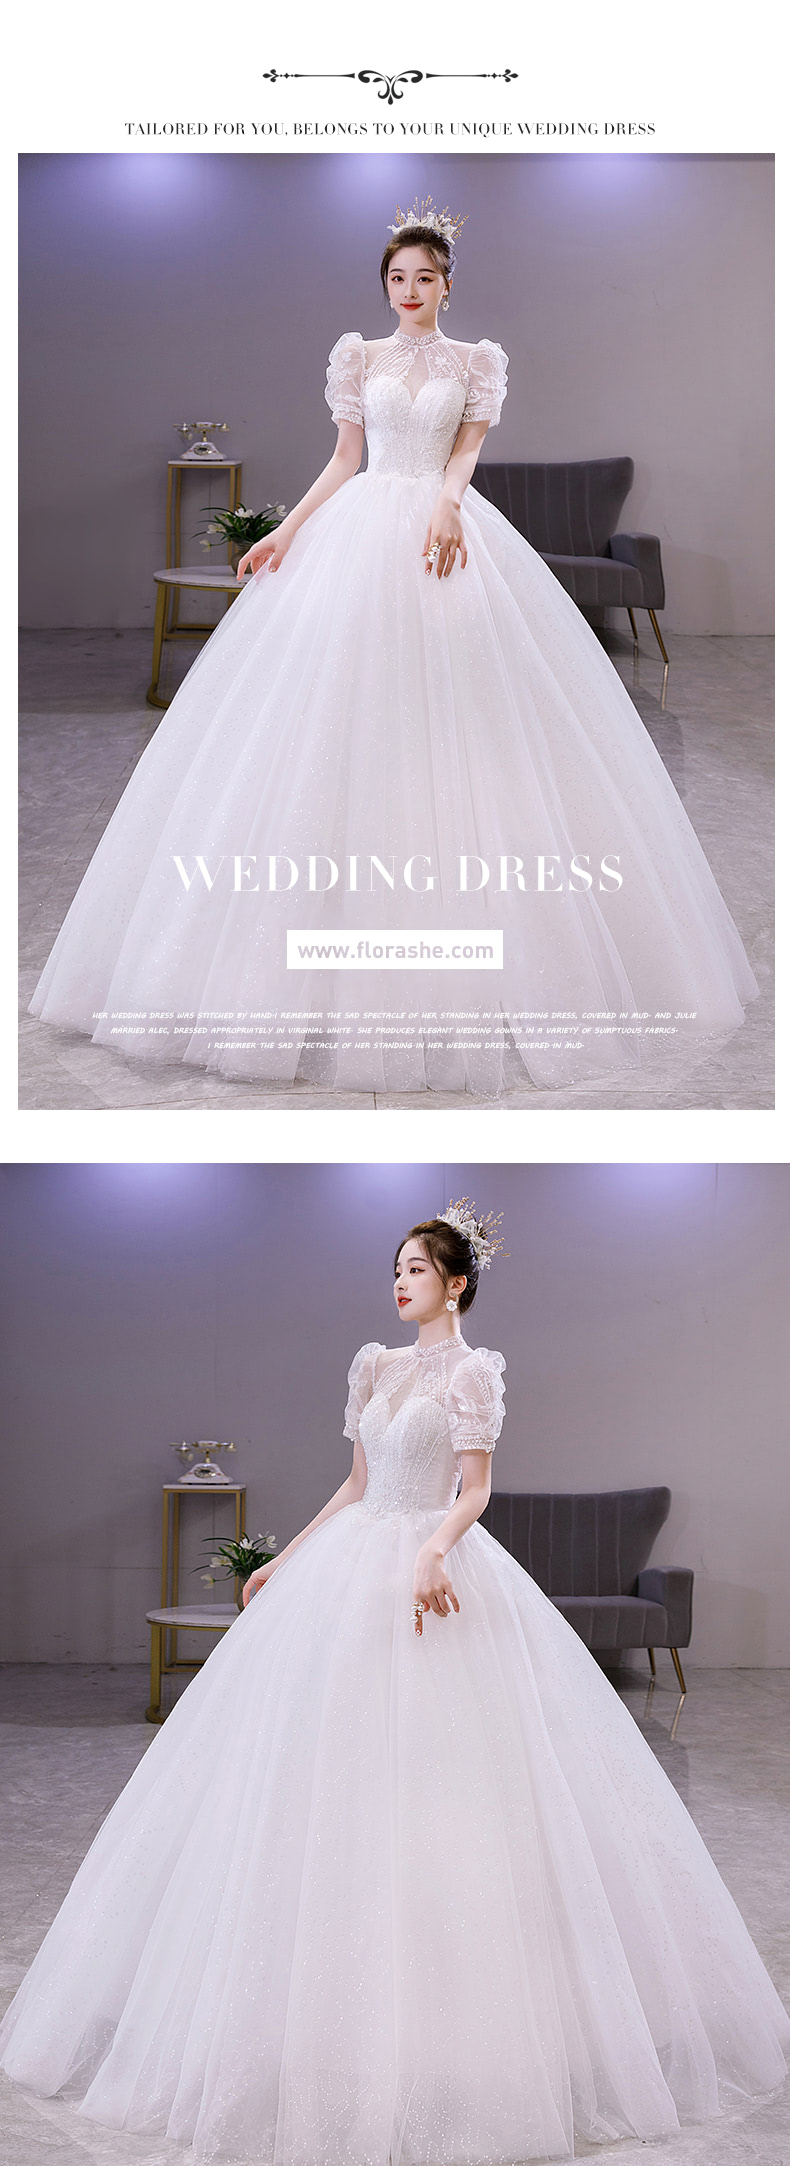 Simple-Romantic-Puff-Sleeve-White-Tulle-Wedding-Bridal-Long-Dress08.jpg